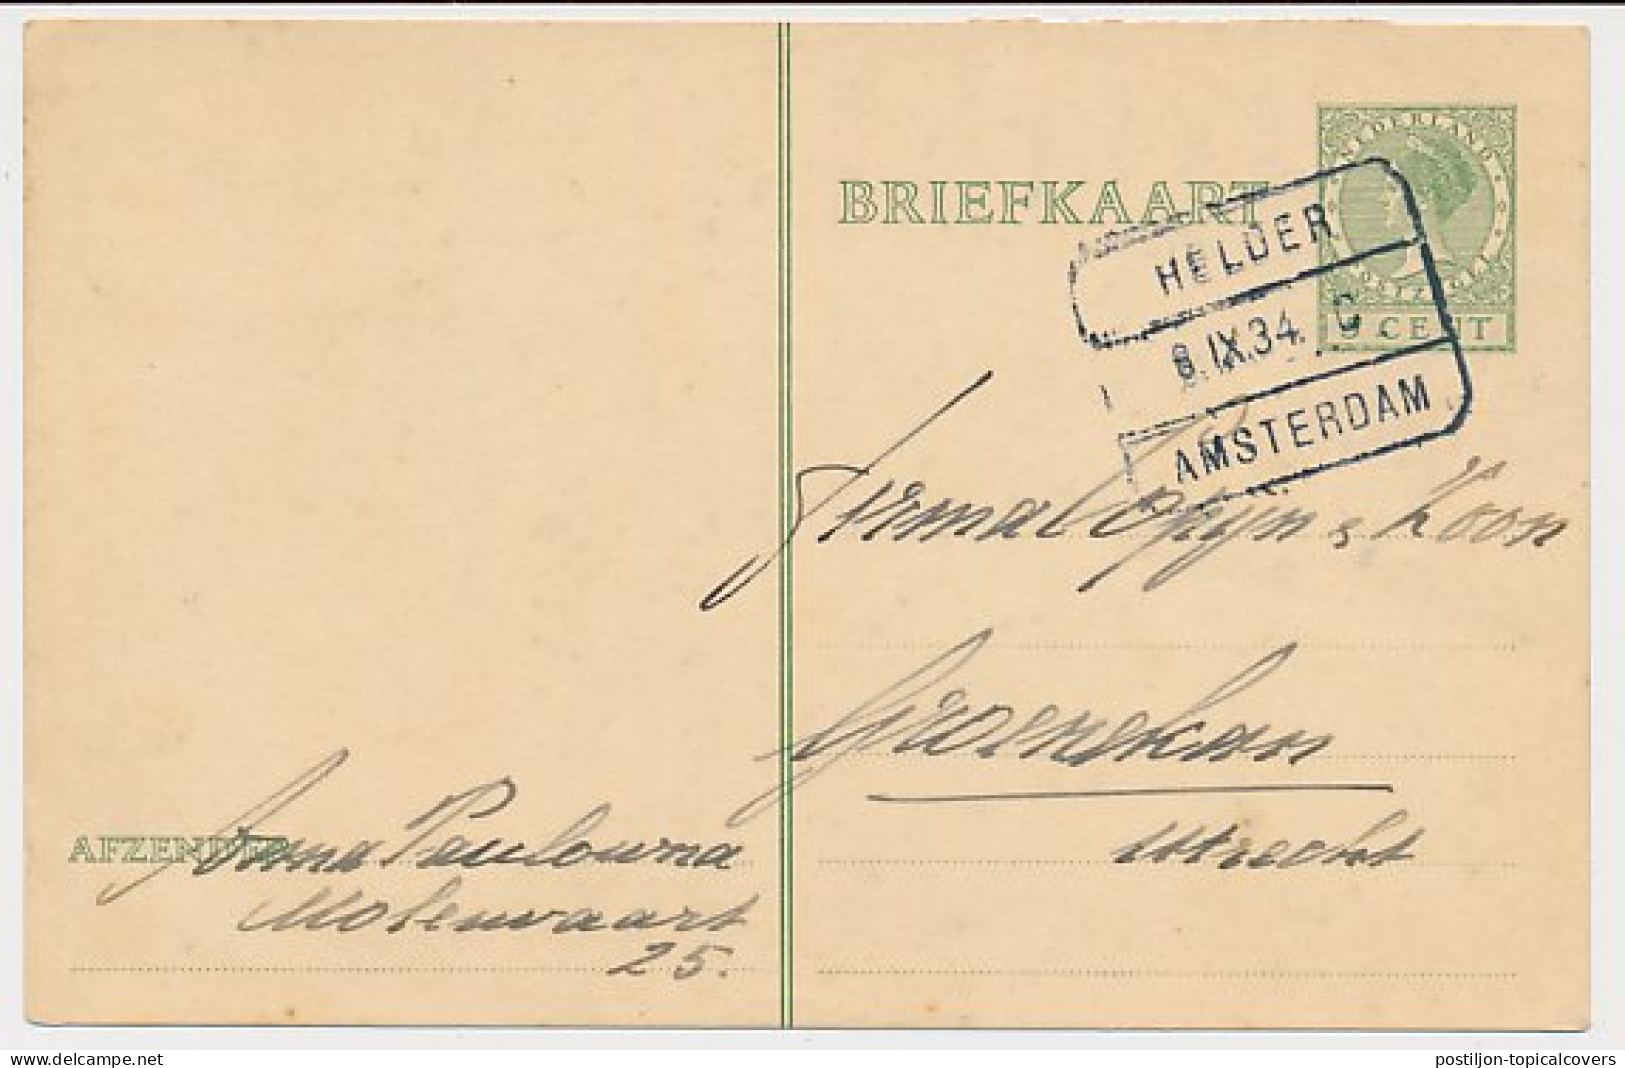 Treinblokstempel : Helder - Amsterdam C 1934 ( Anna Paulowna ) - Unclassified